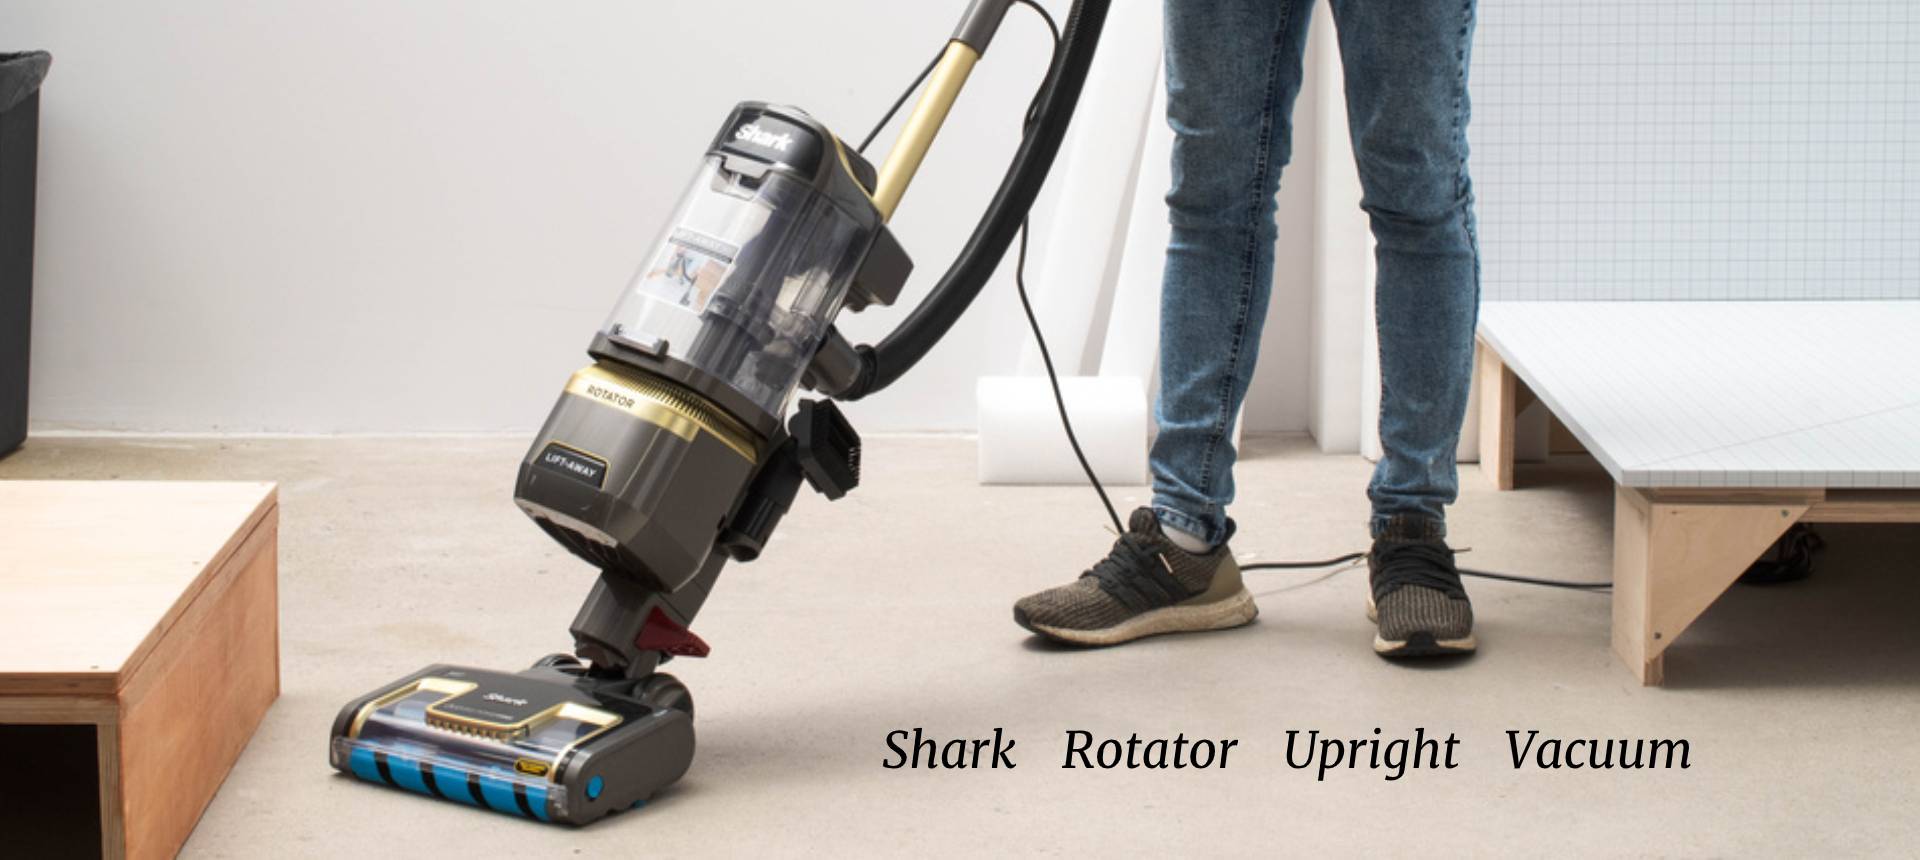 Shark Rotator Upright Vacuum